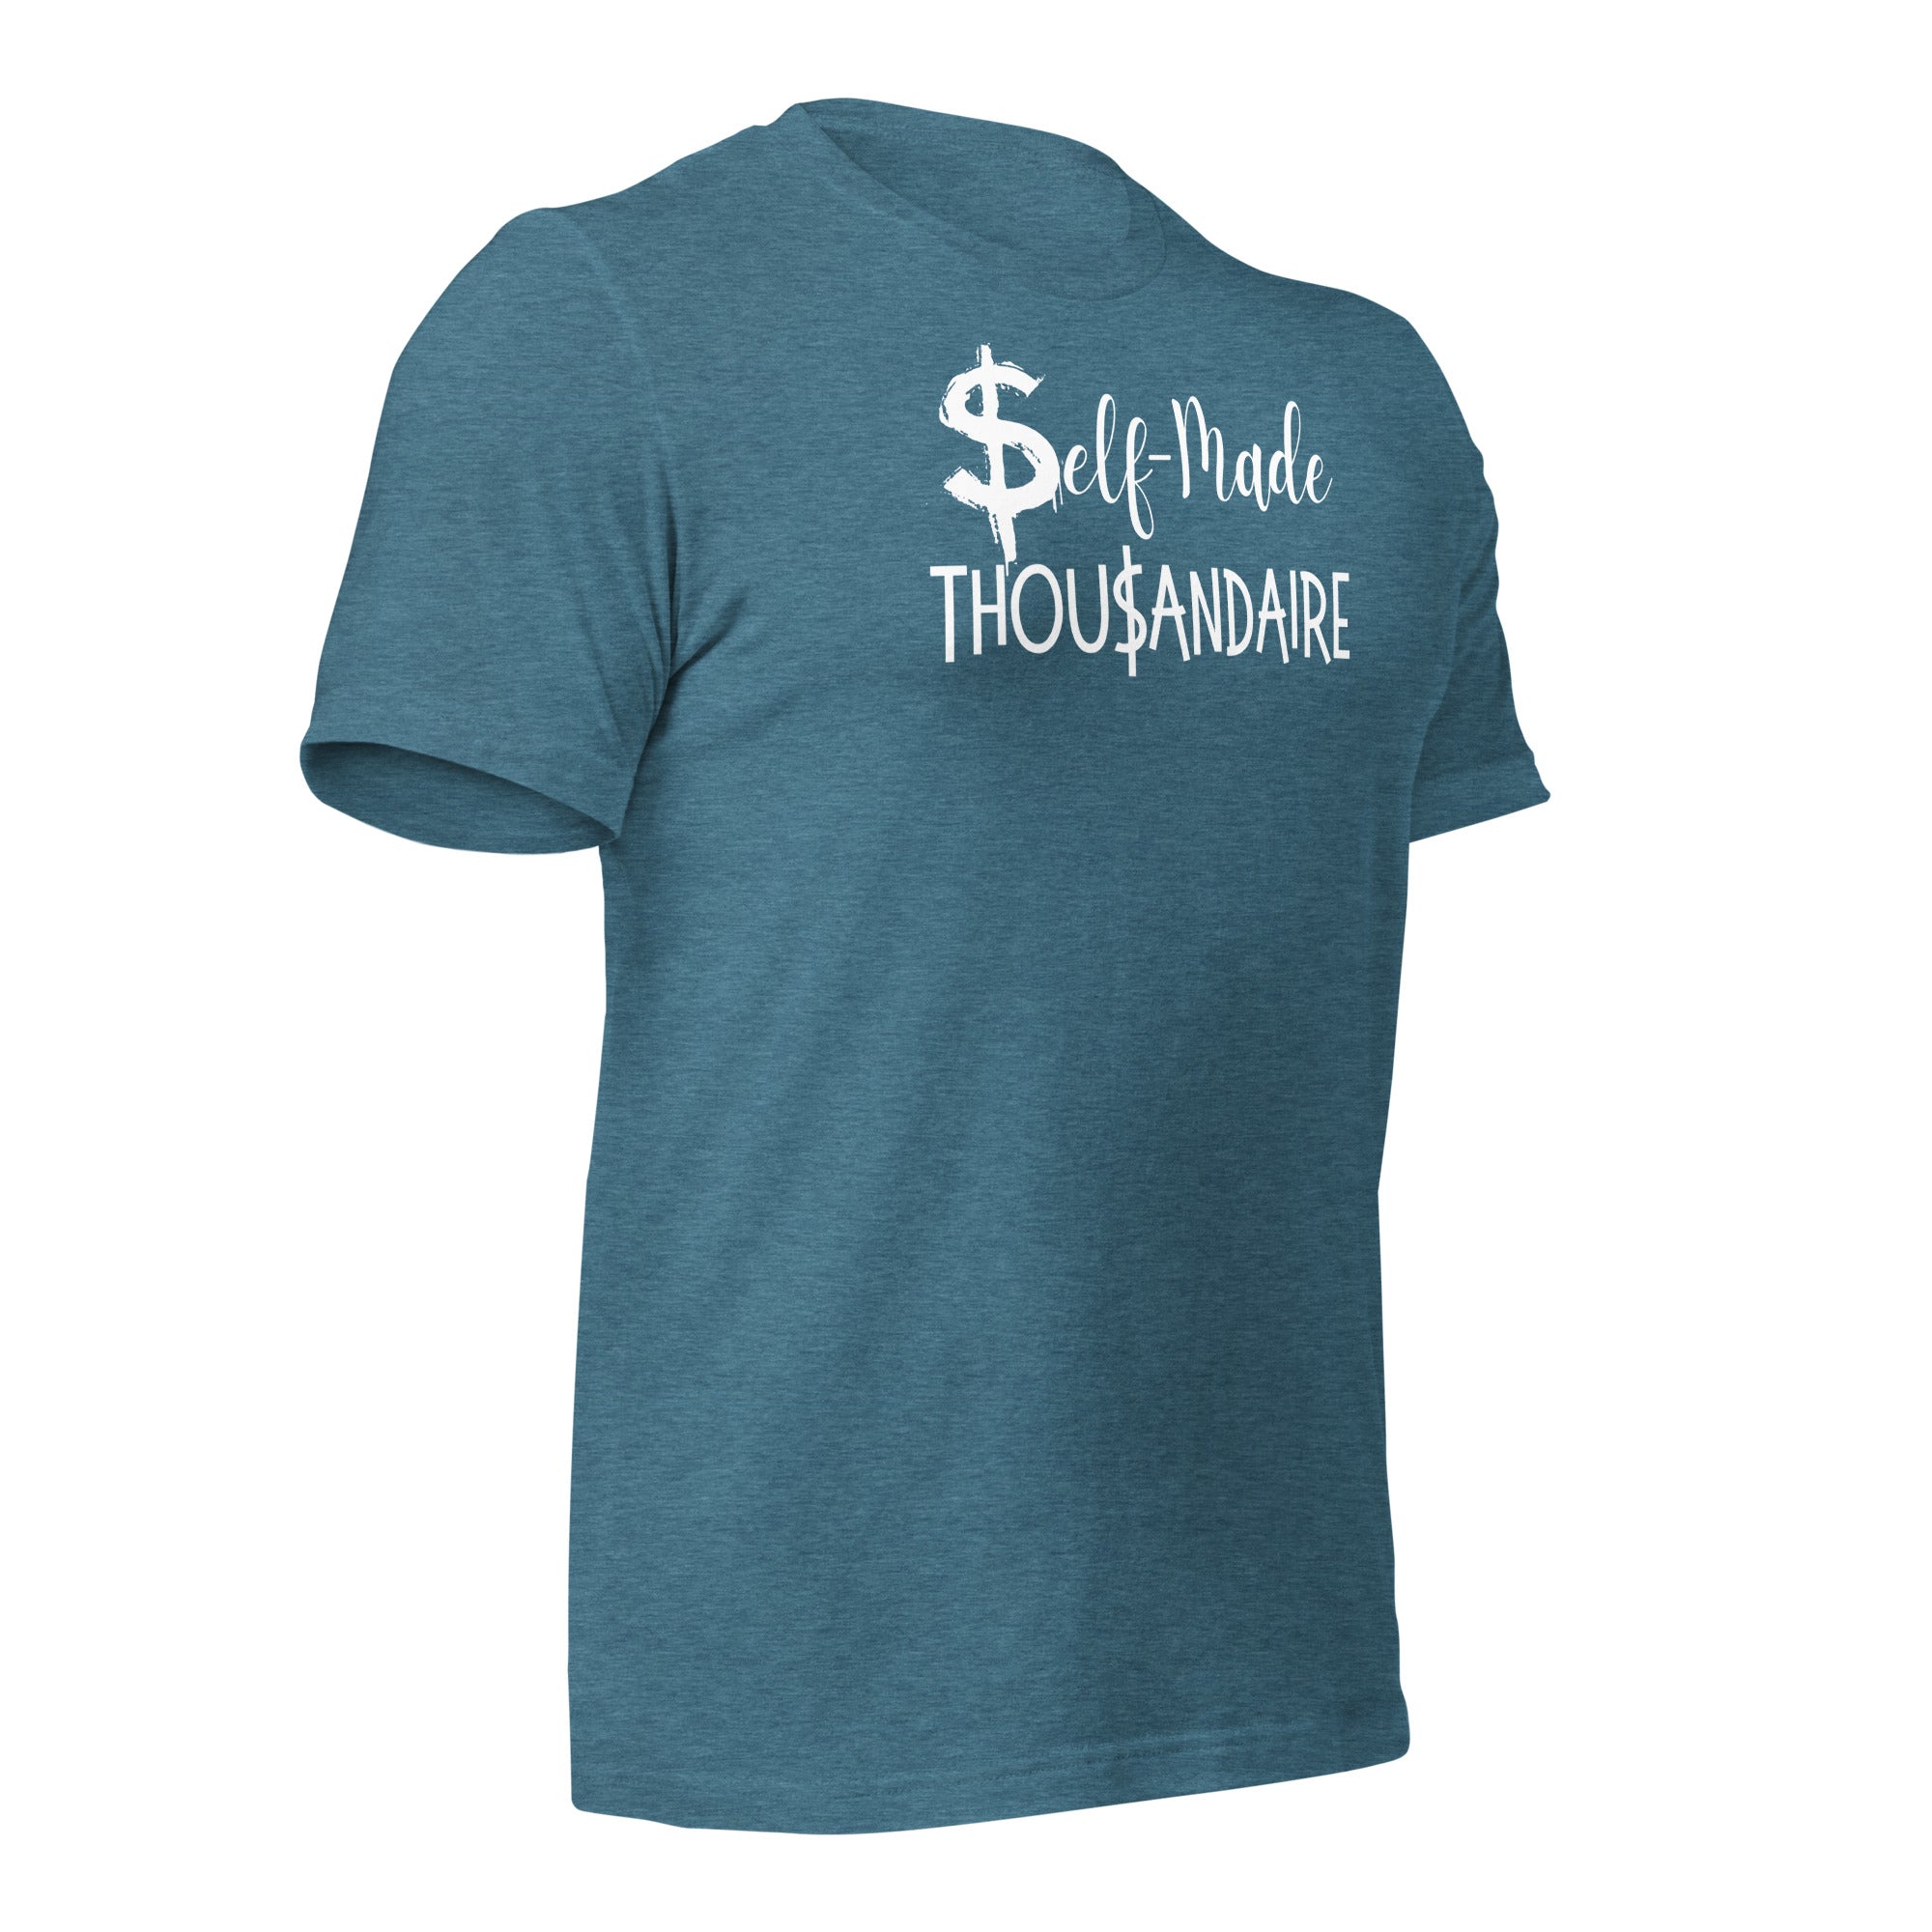 Self-Made Thousandaire Startup T-Shirt